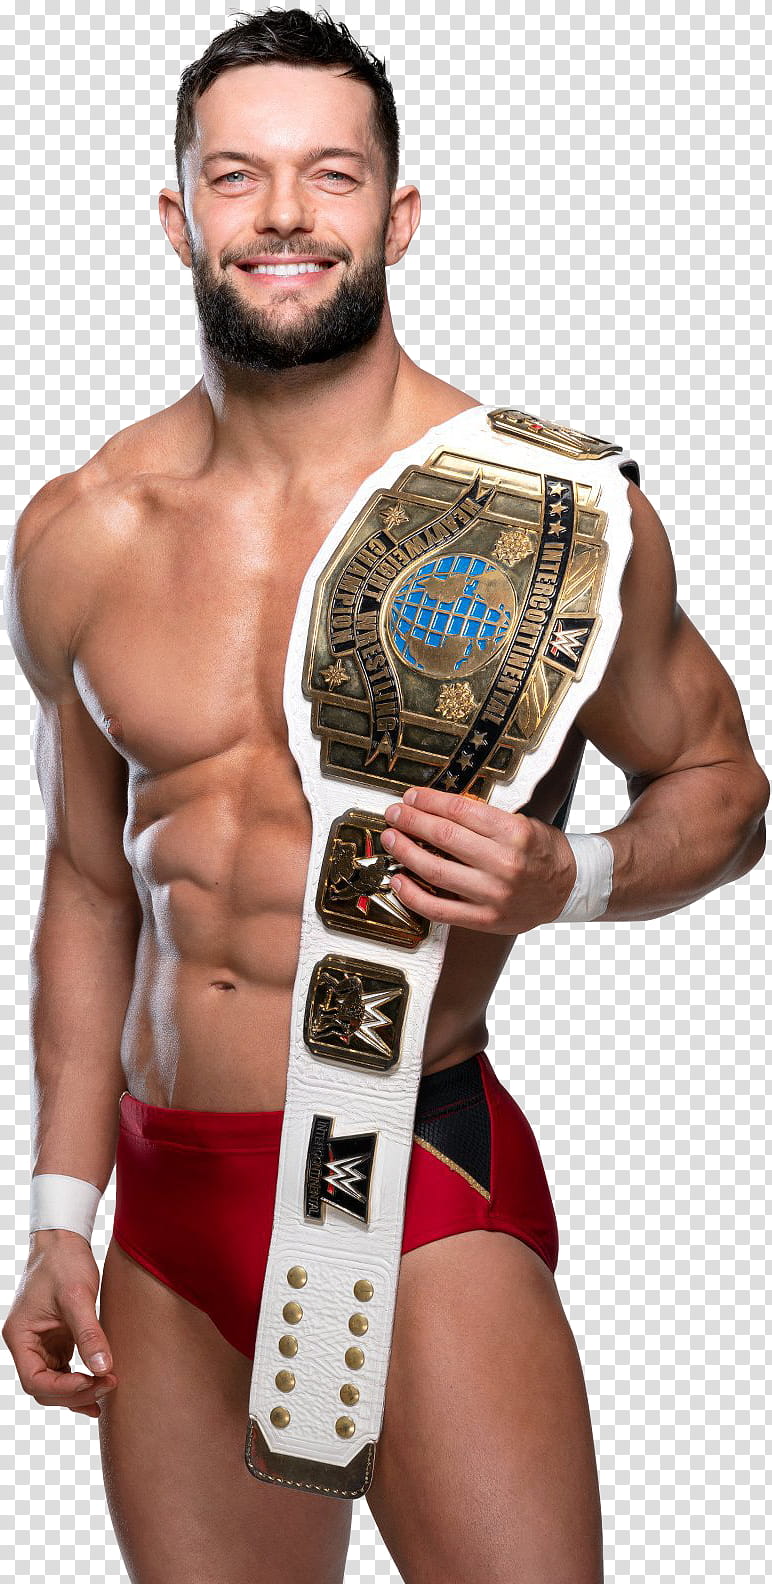 Finn Balor Intercontinental Champion transparent background PNG clipart